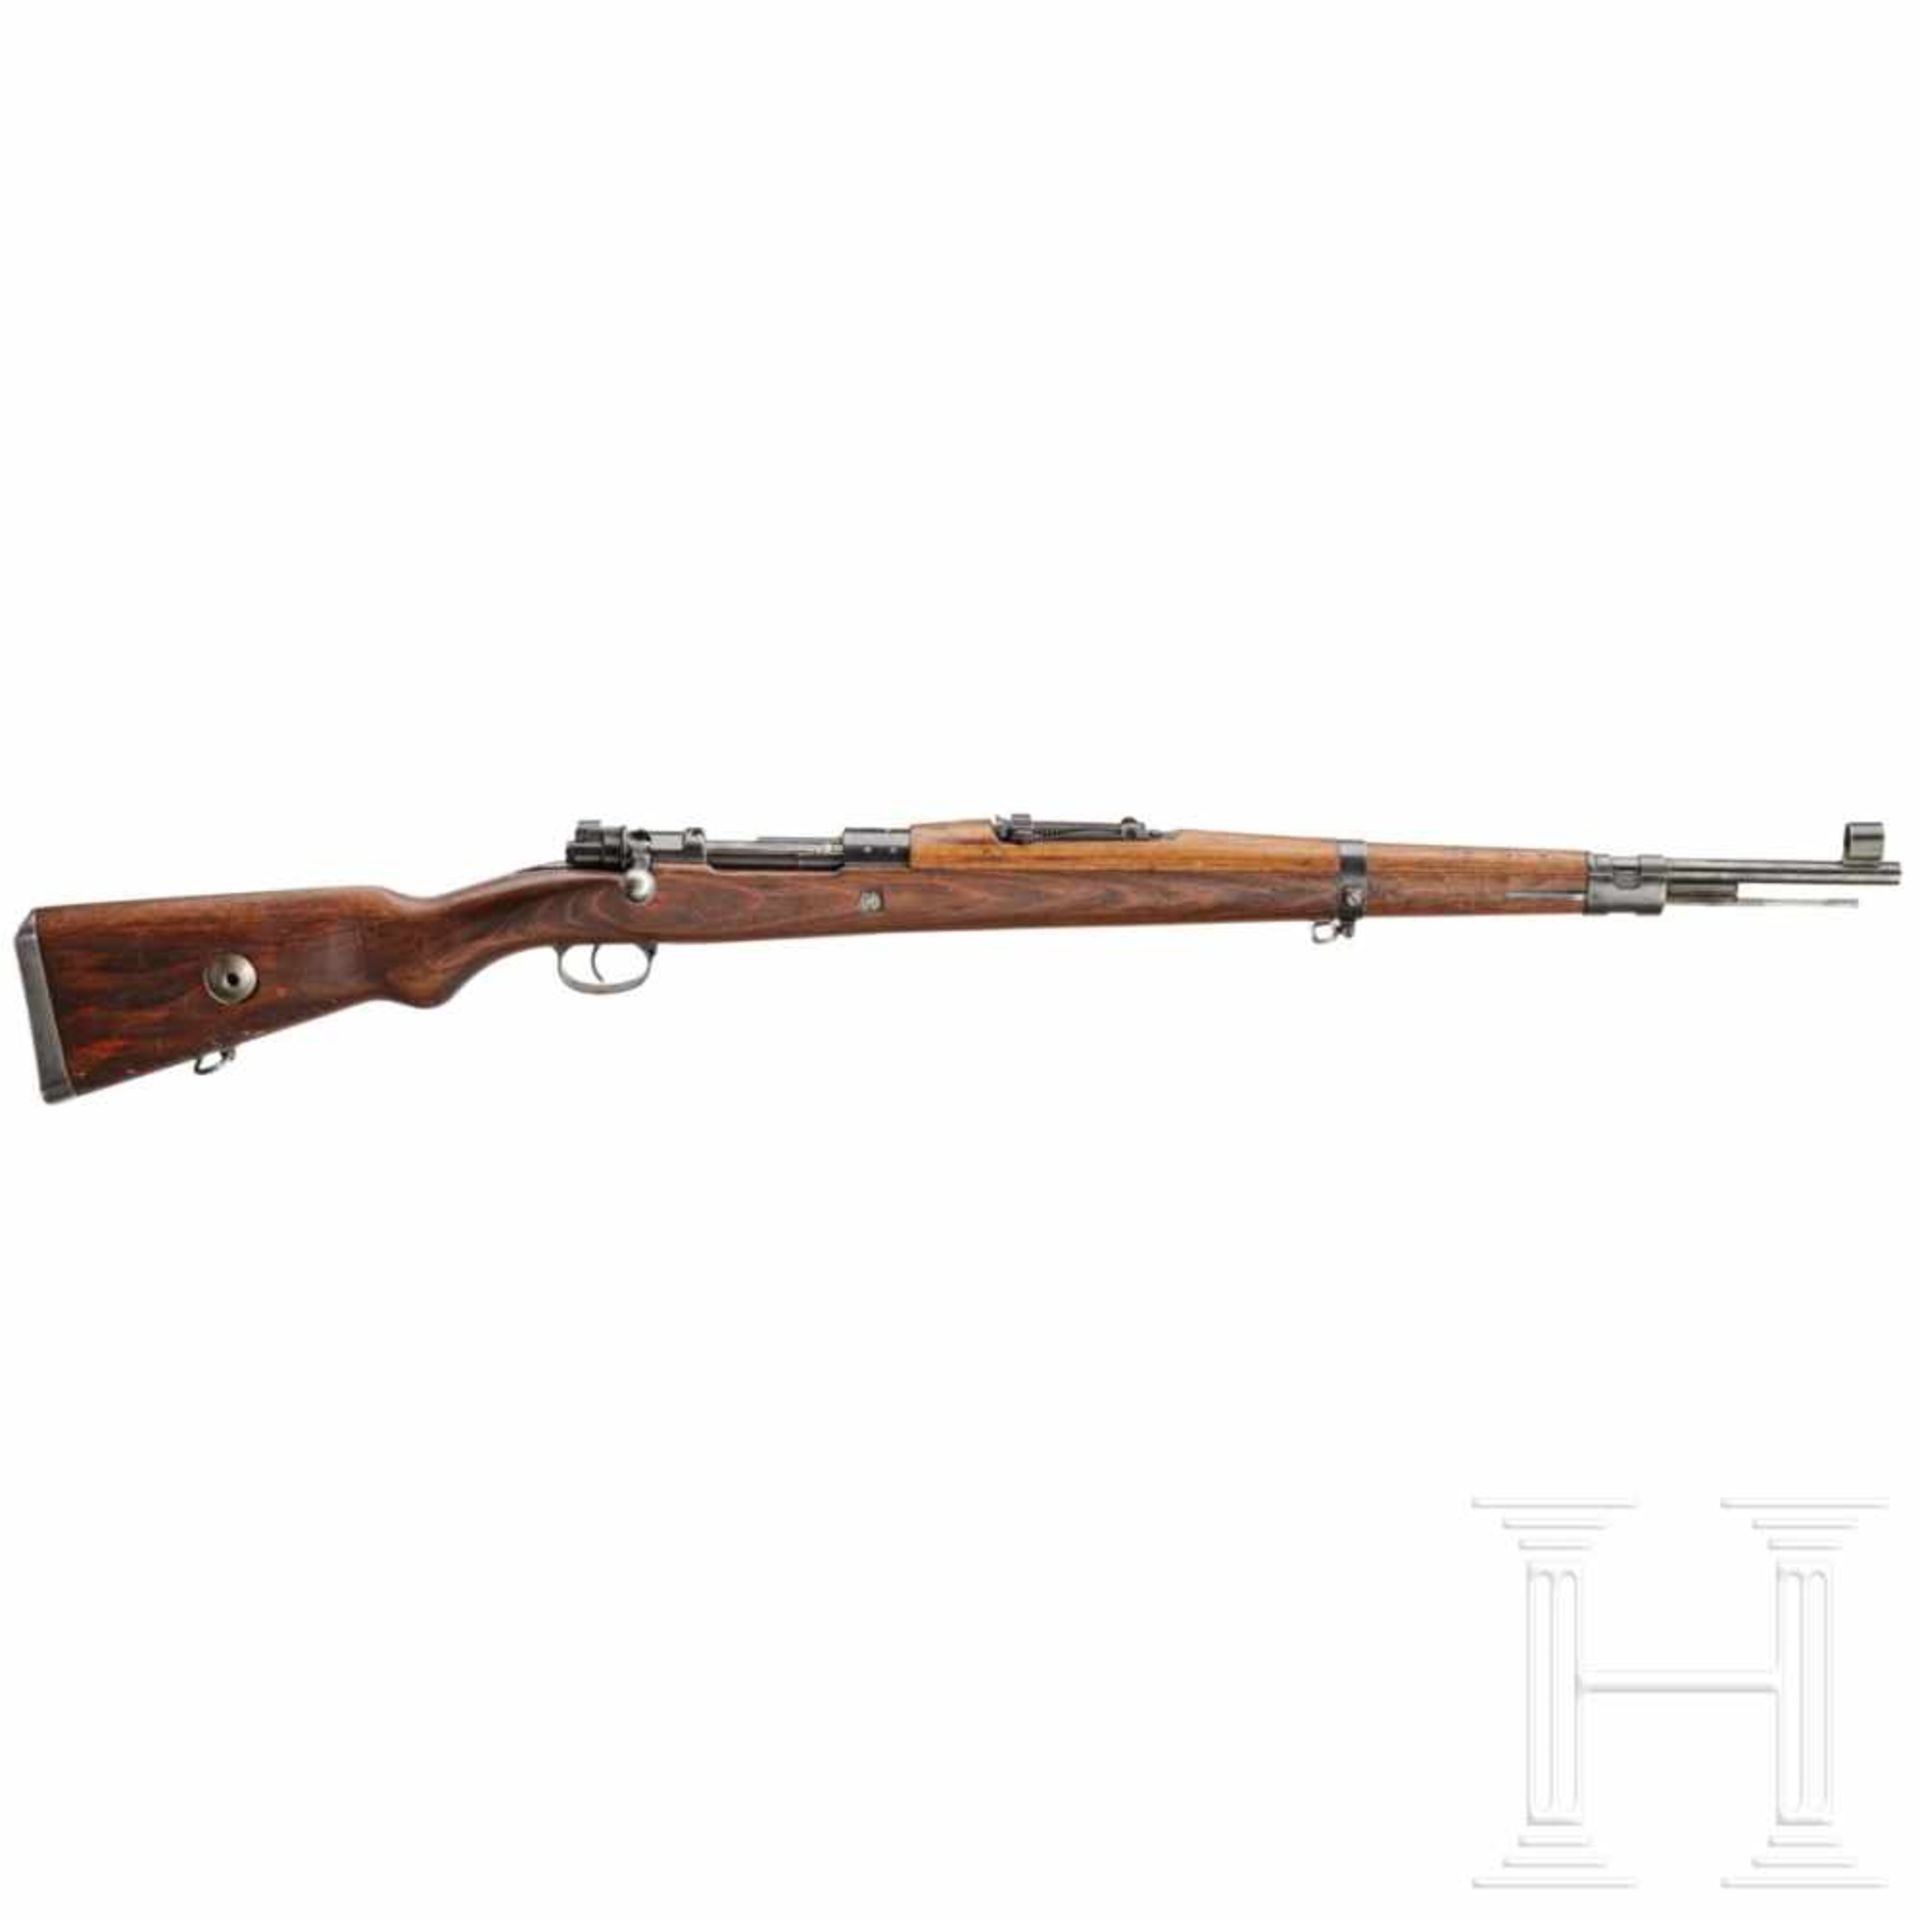 A rifle "G 24(T)", code "dou - 42"Kal. 8x57 IS, Nr. 7313, Verschluss nicht nummerngleich, alle